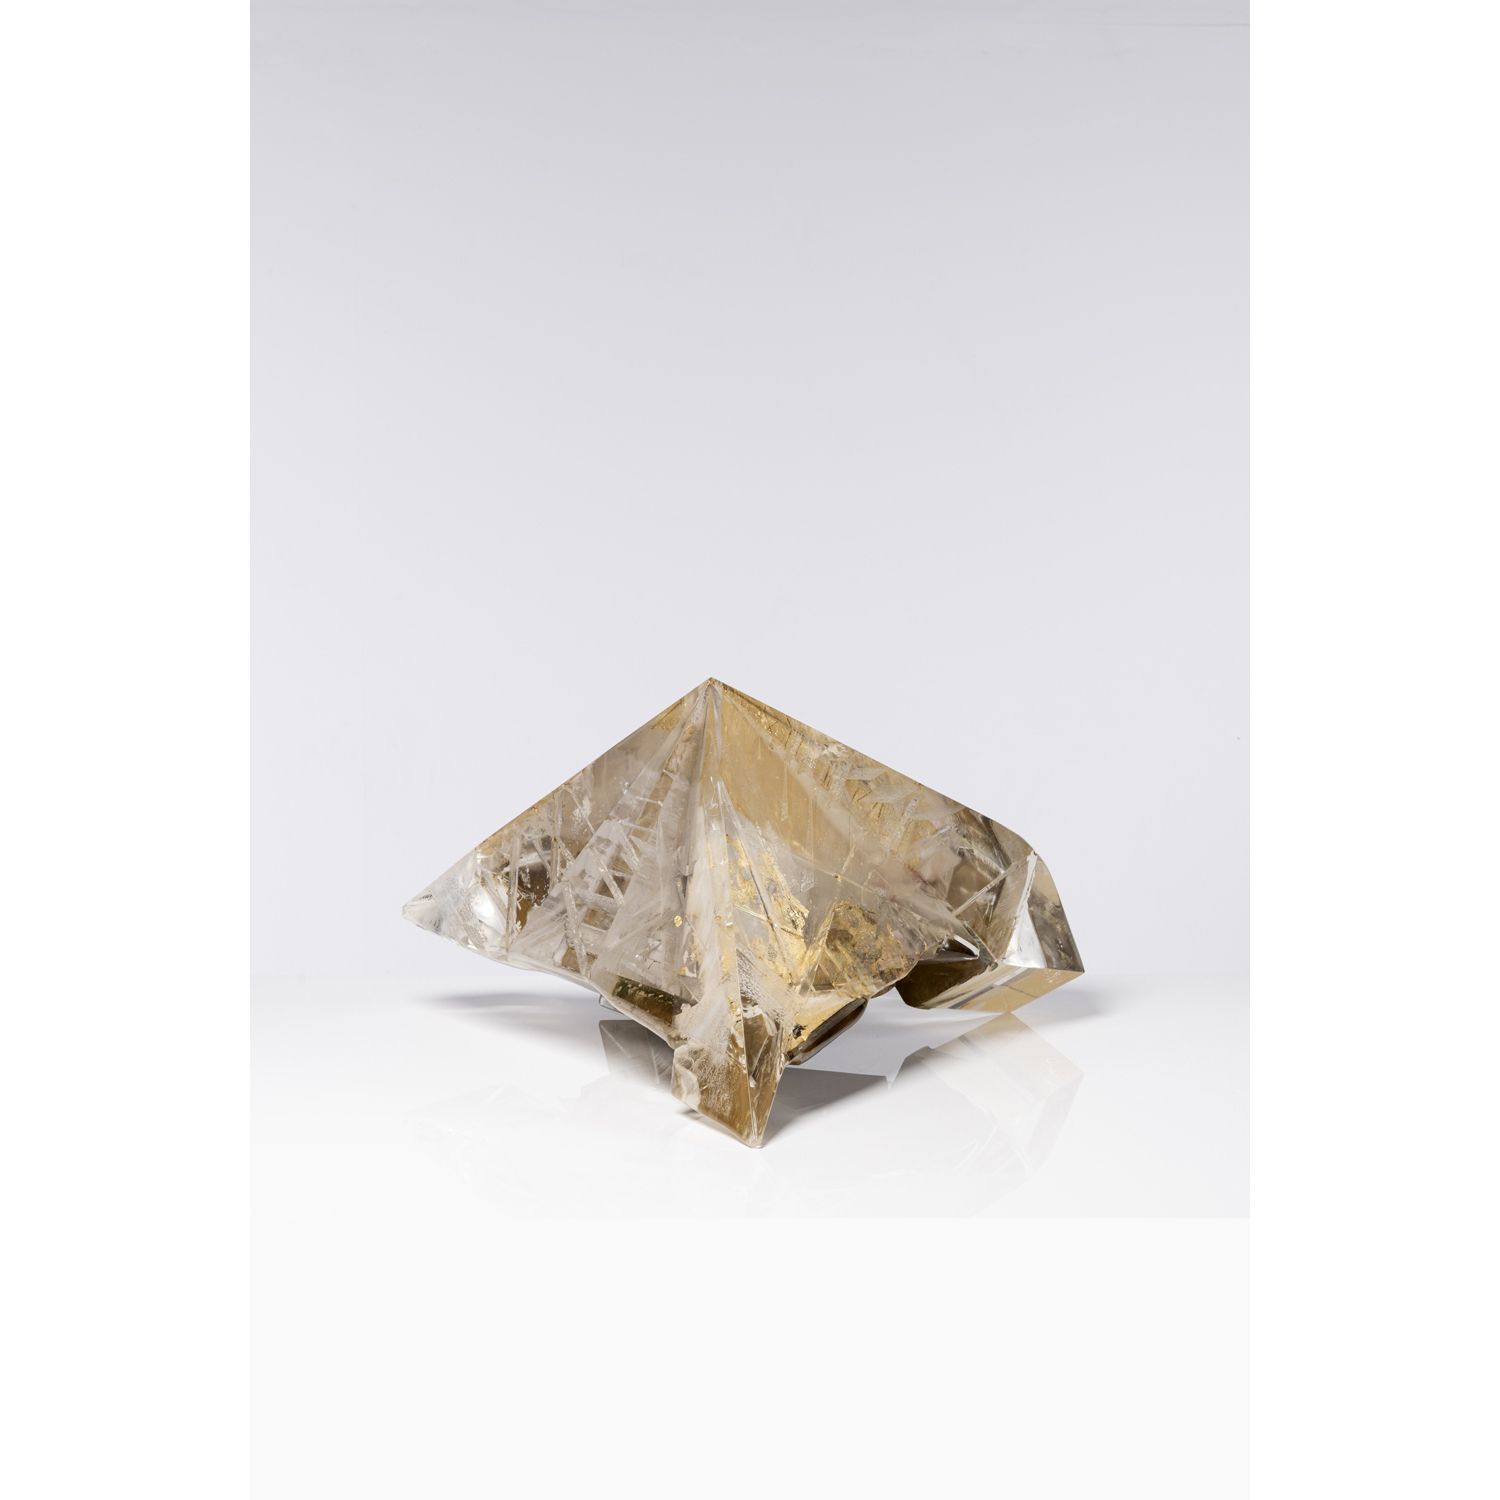 Null 莫尼克-罗赞尼斯（生于1936年

金字塔和黄金, 2003

有机玻璃中的金字塔形雕塑，内含金箔纸

背面有签名

独特的作品

高47×宽62×深&hellip;